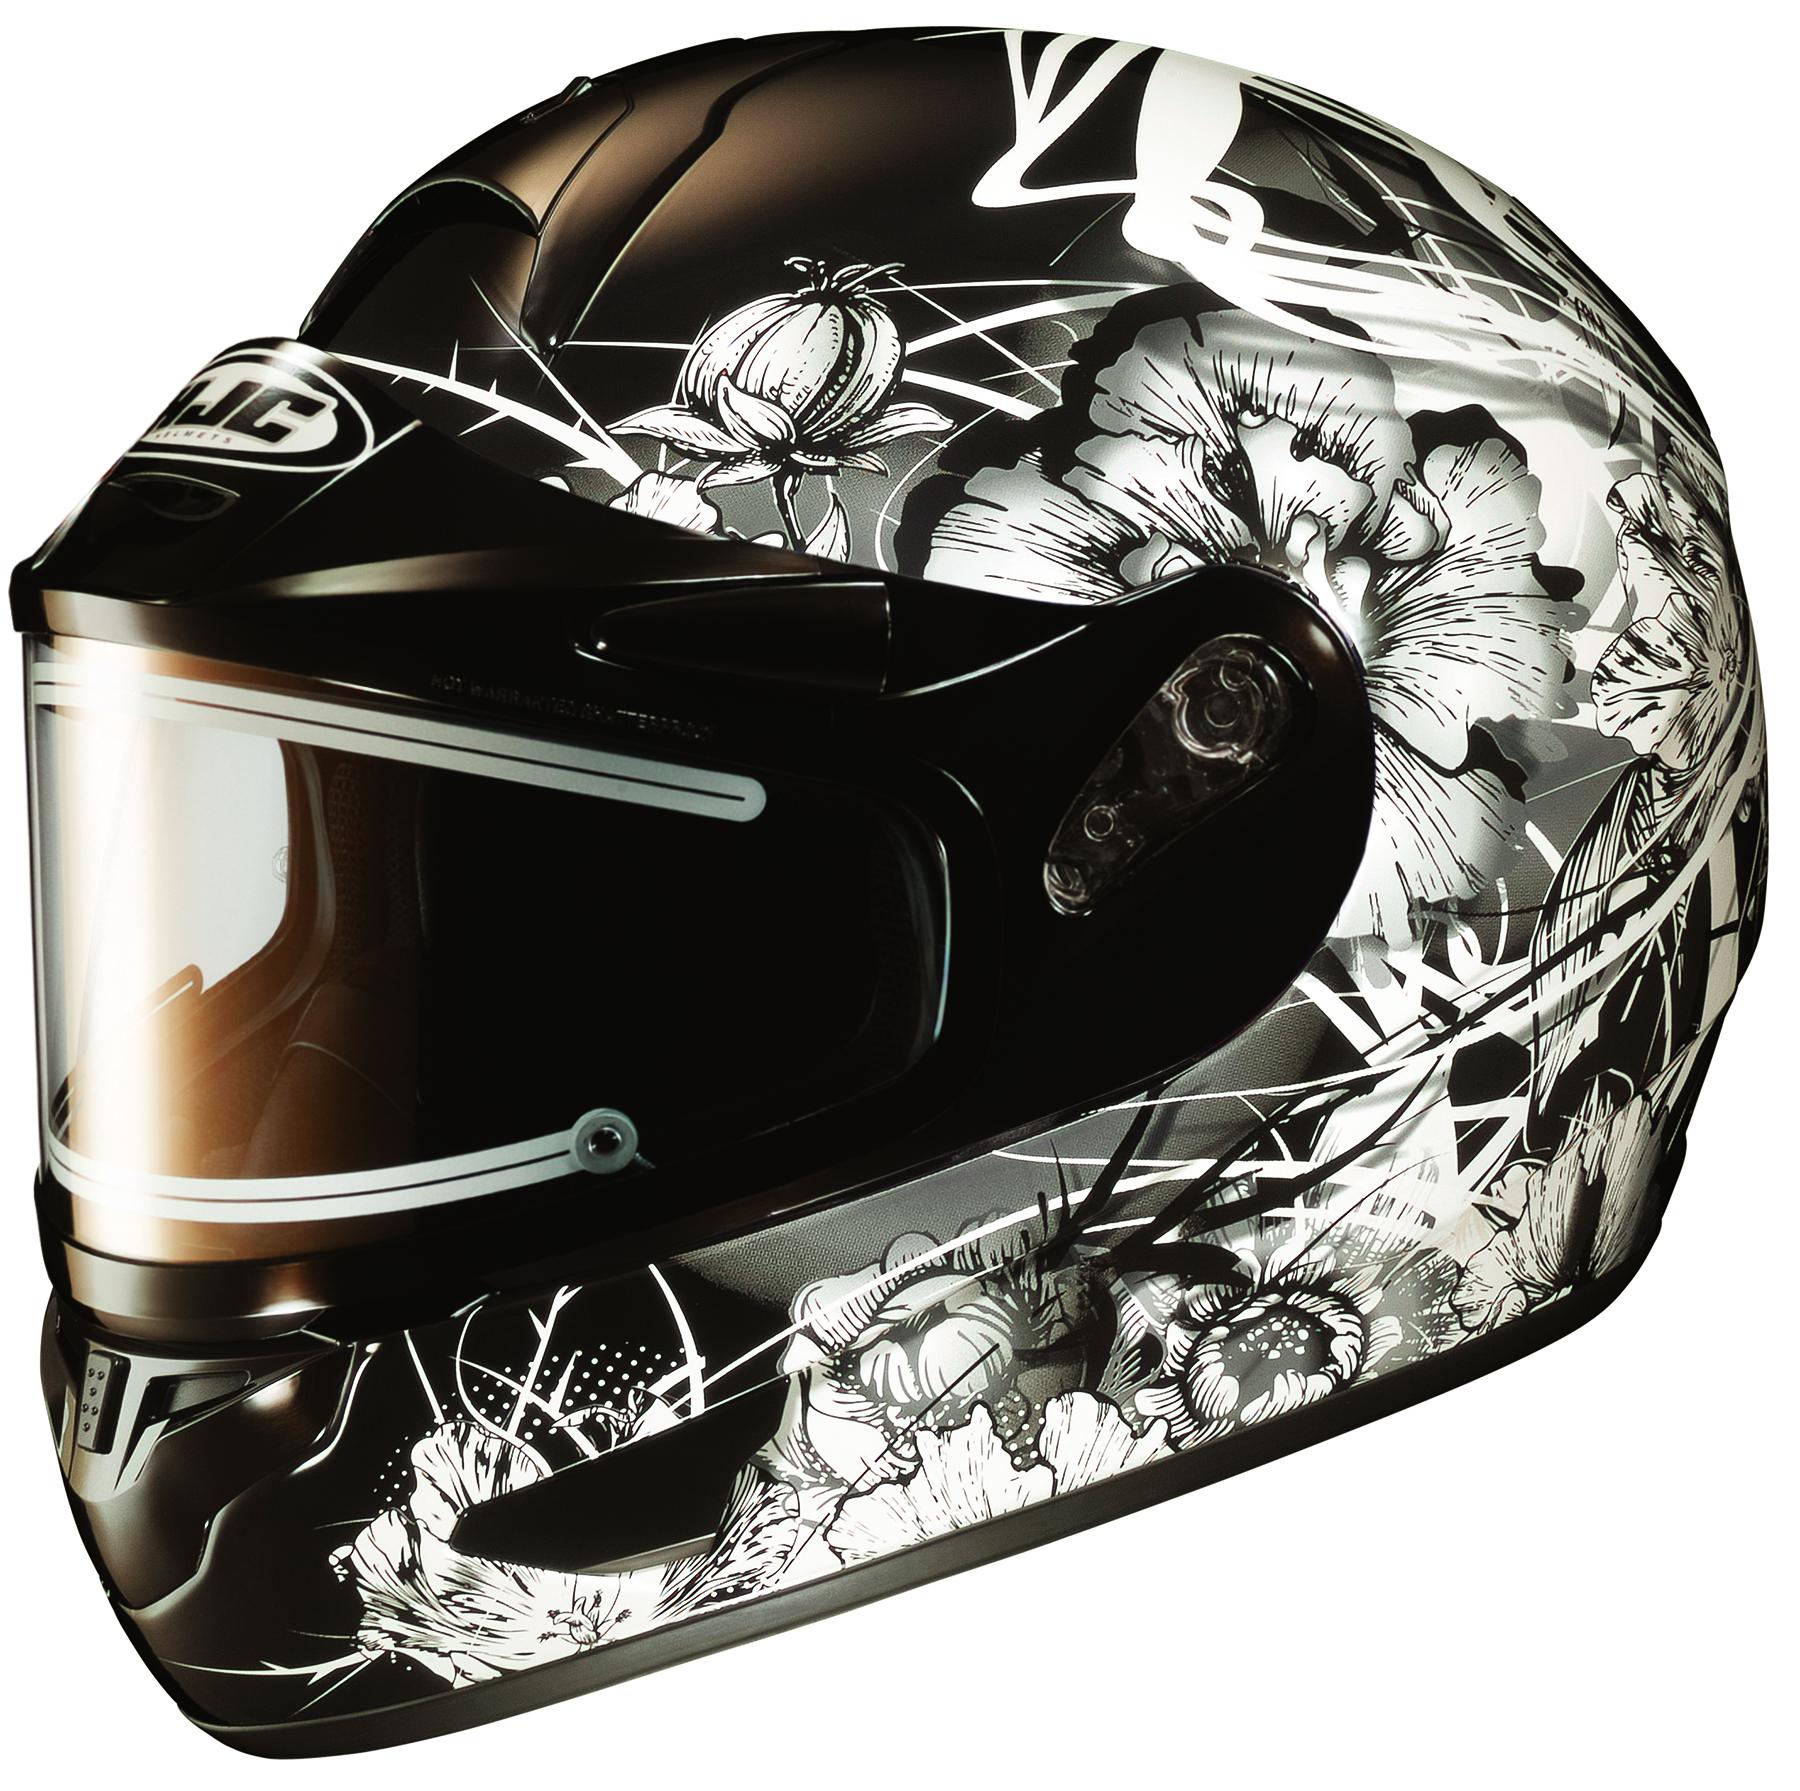 Hjc cl-16 virgo full face motorcycle helmet electric shield black size large